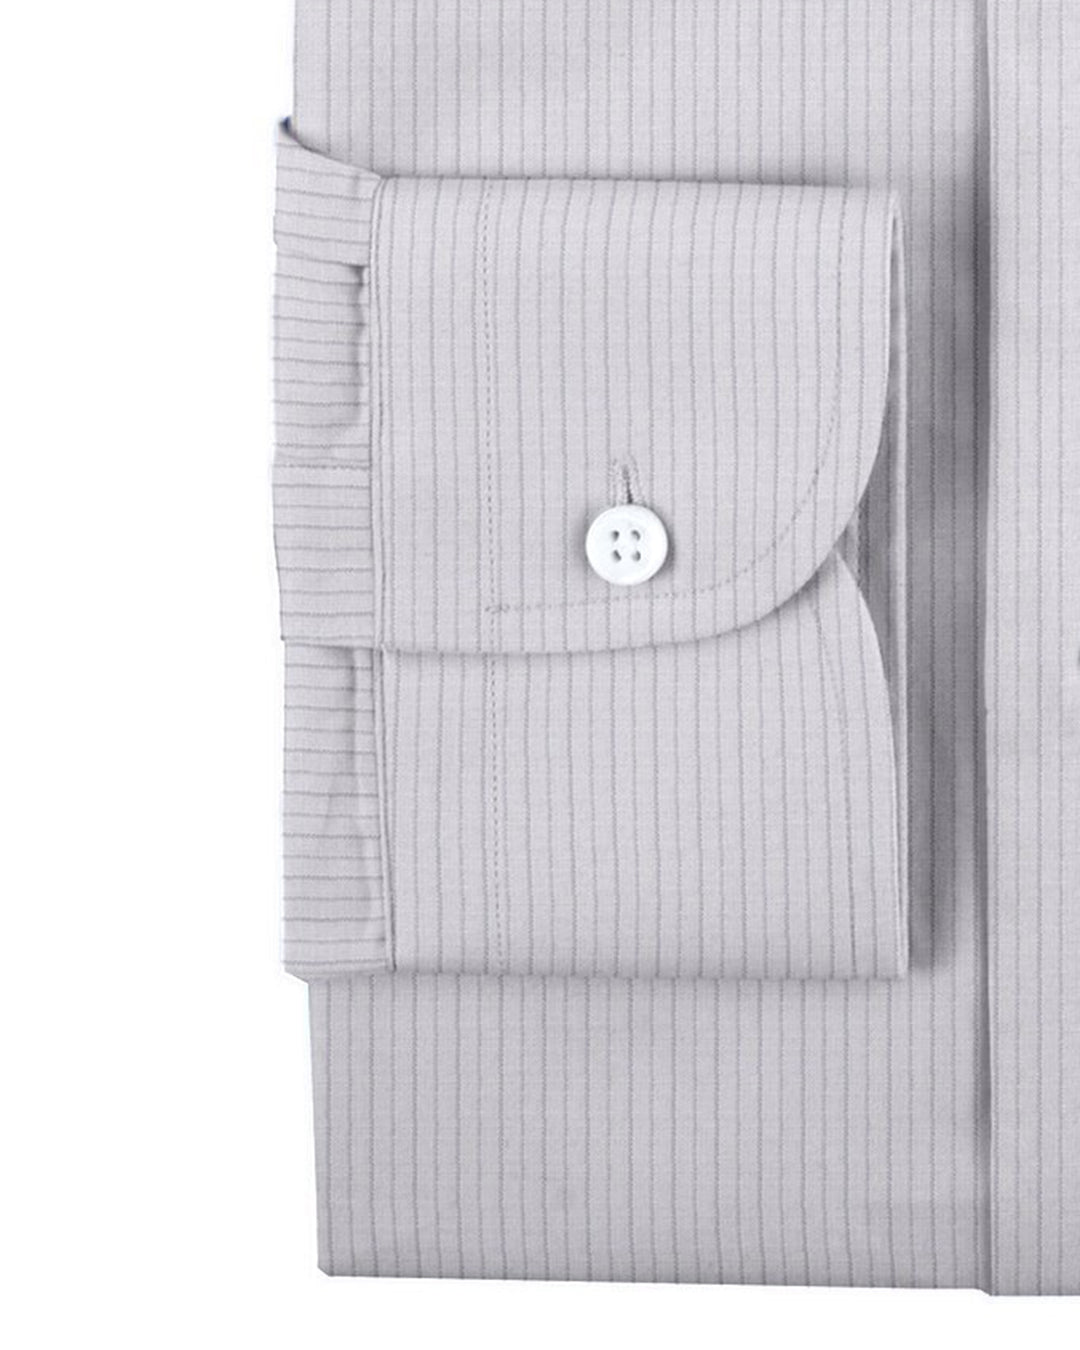 Linen:Vertical Grey Pinstripes on white